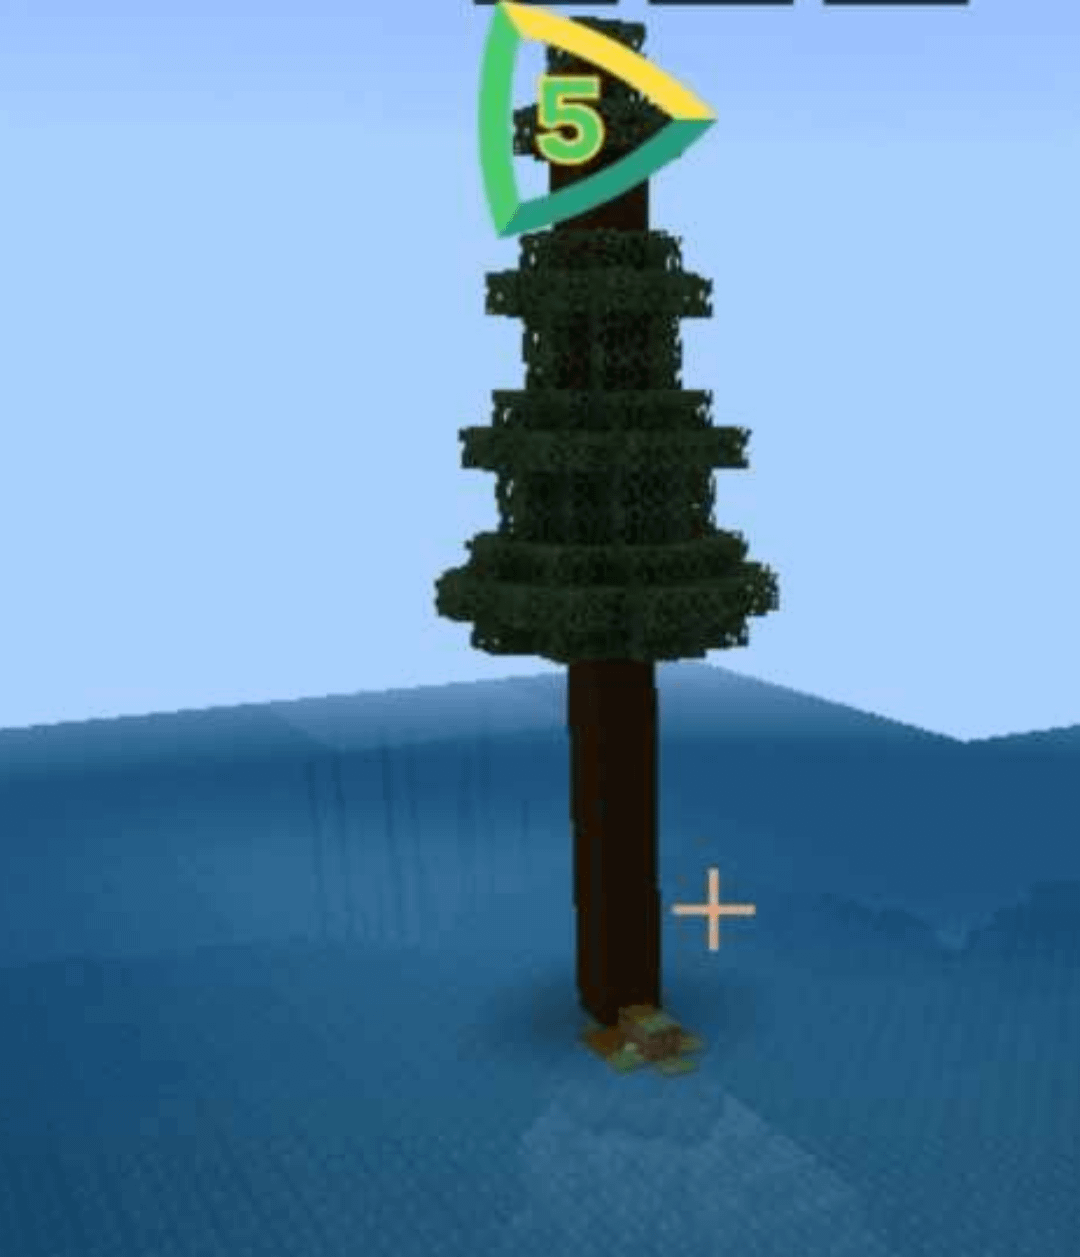 Minecraft Memes - Deepsea Branches